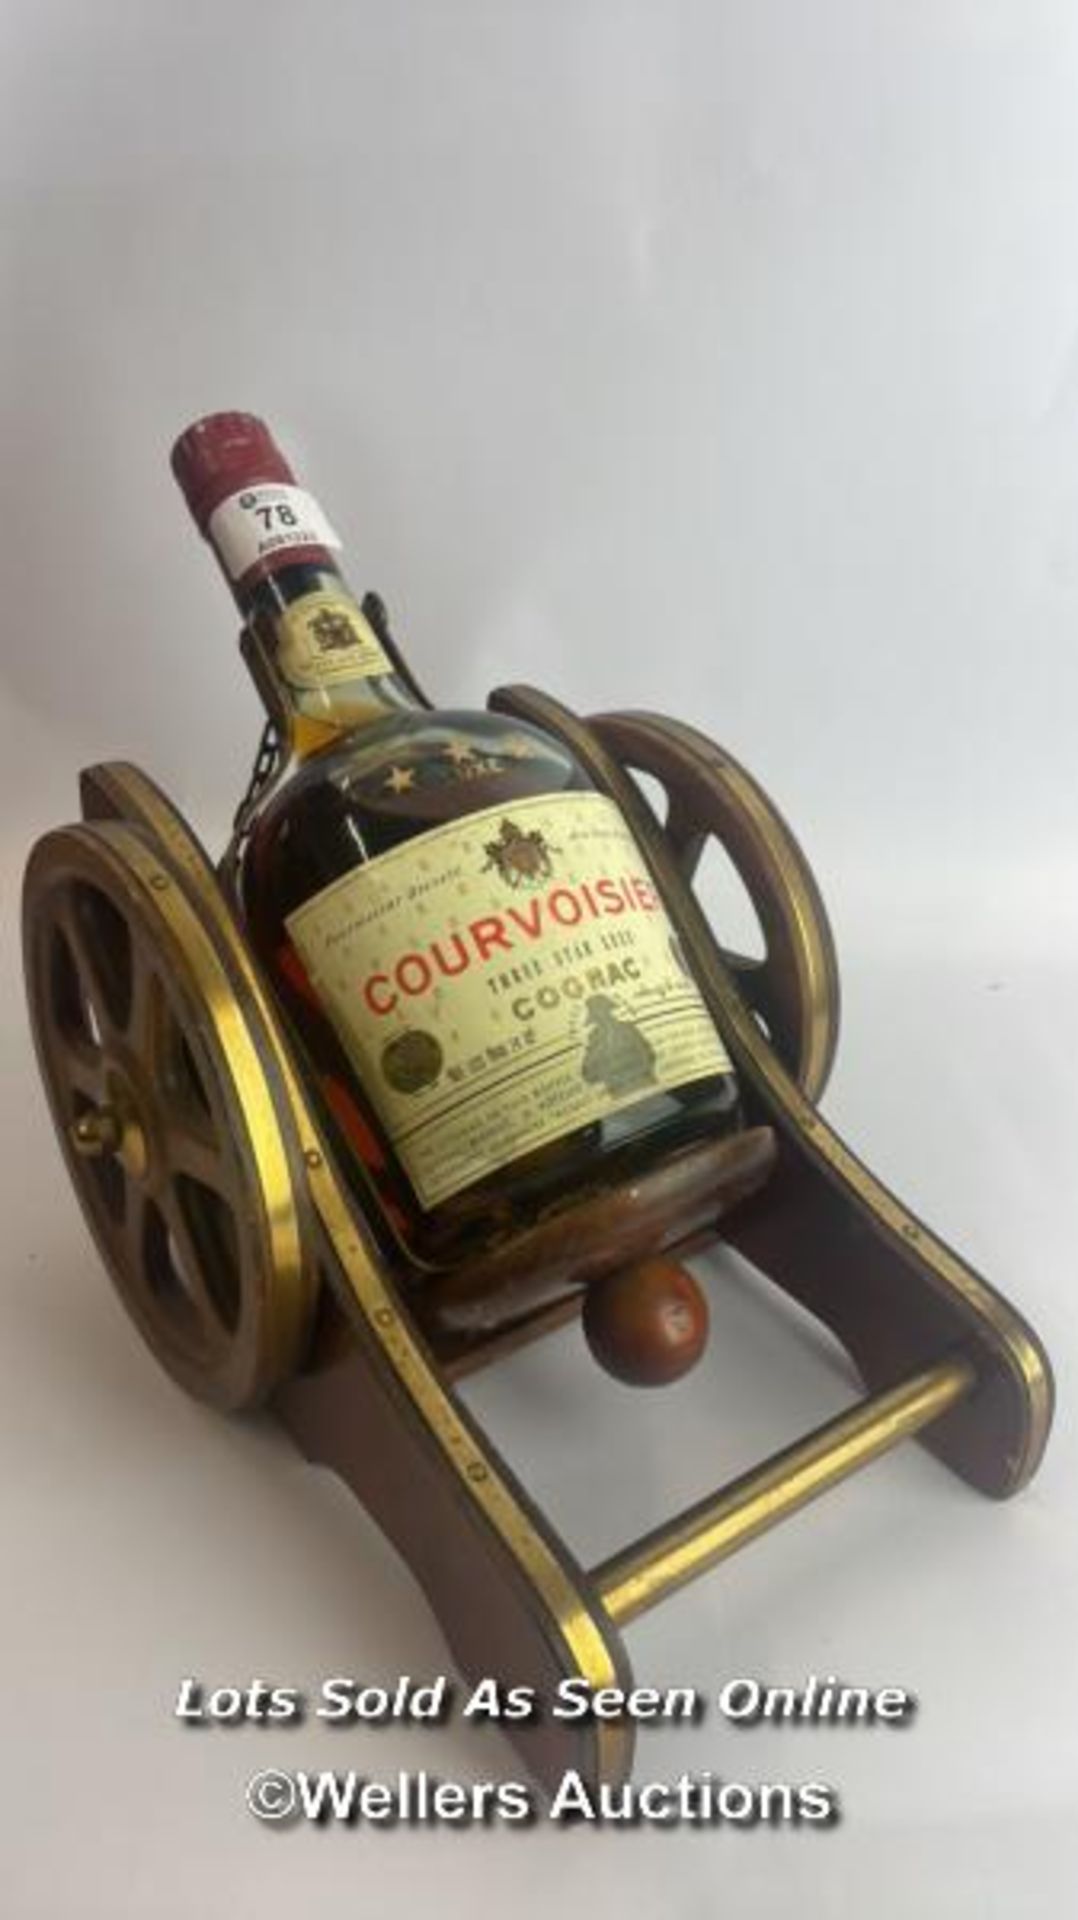 Courvoisier 3 Star Luxe Cognac, 24oz, Includes cannon style Couroisier branded pourer / Please see